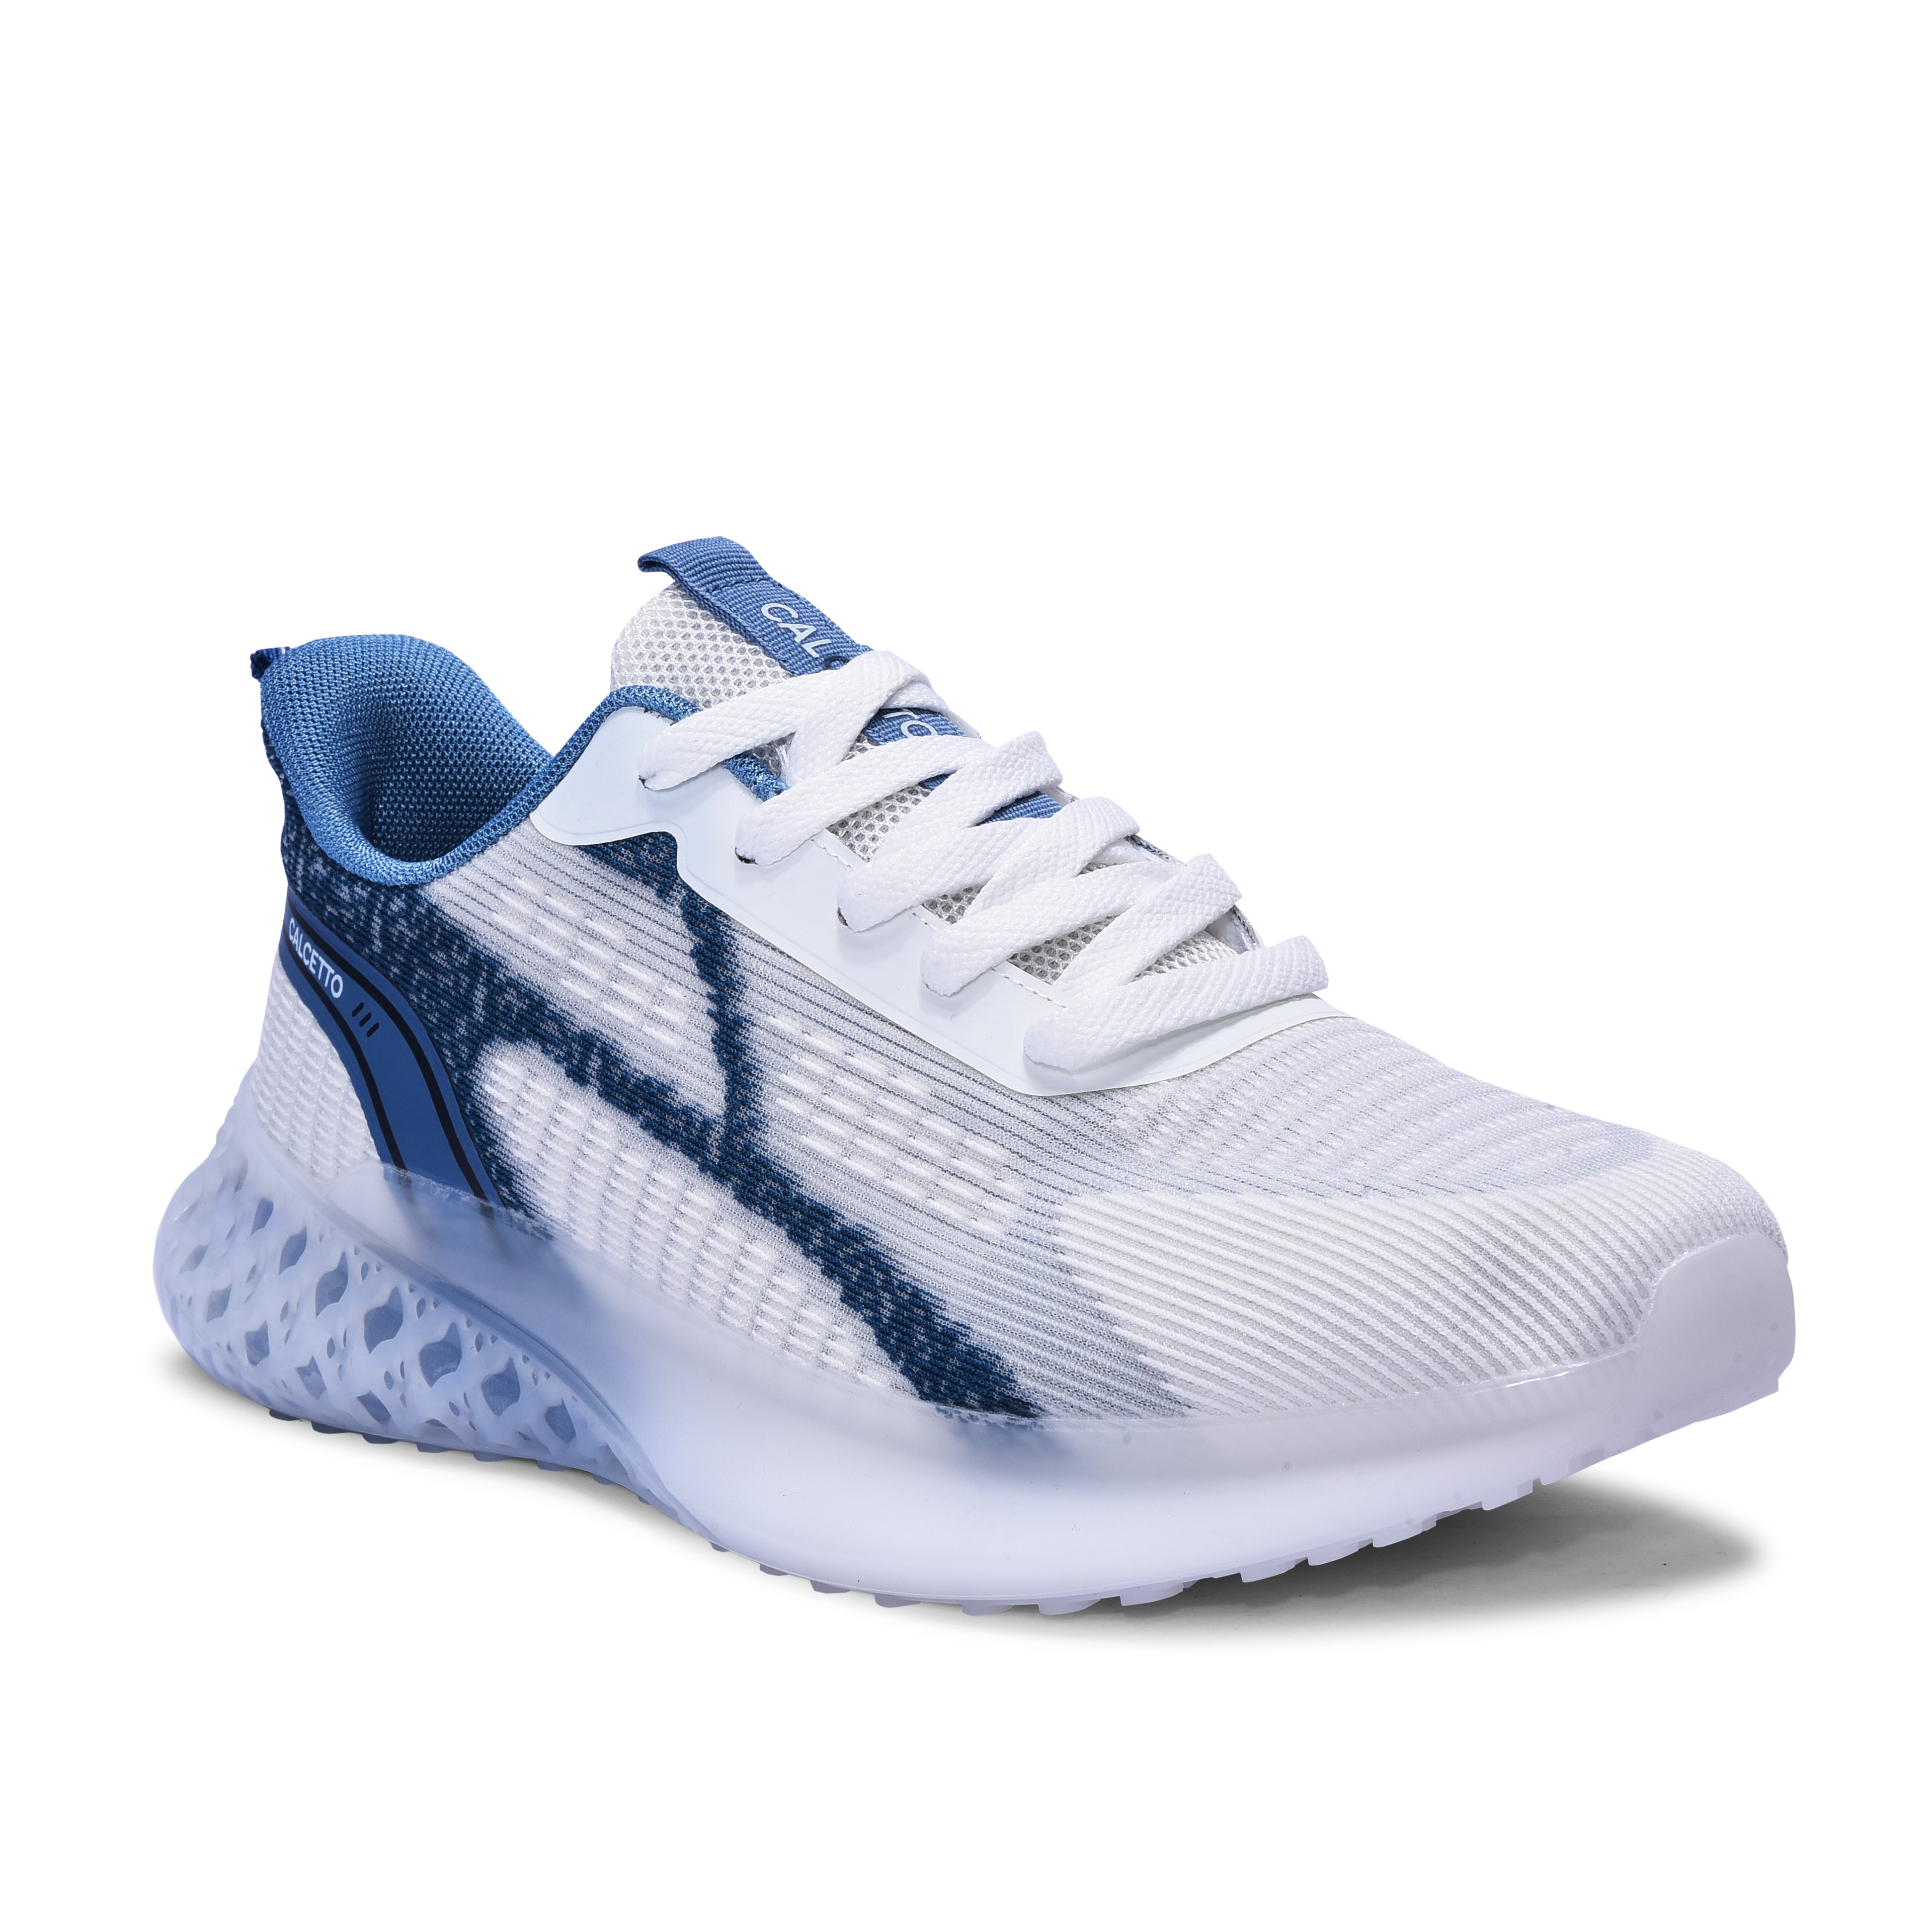 Calcetto CLT-0985 White Blue Casual Shoe For Men